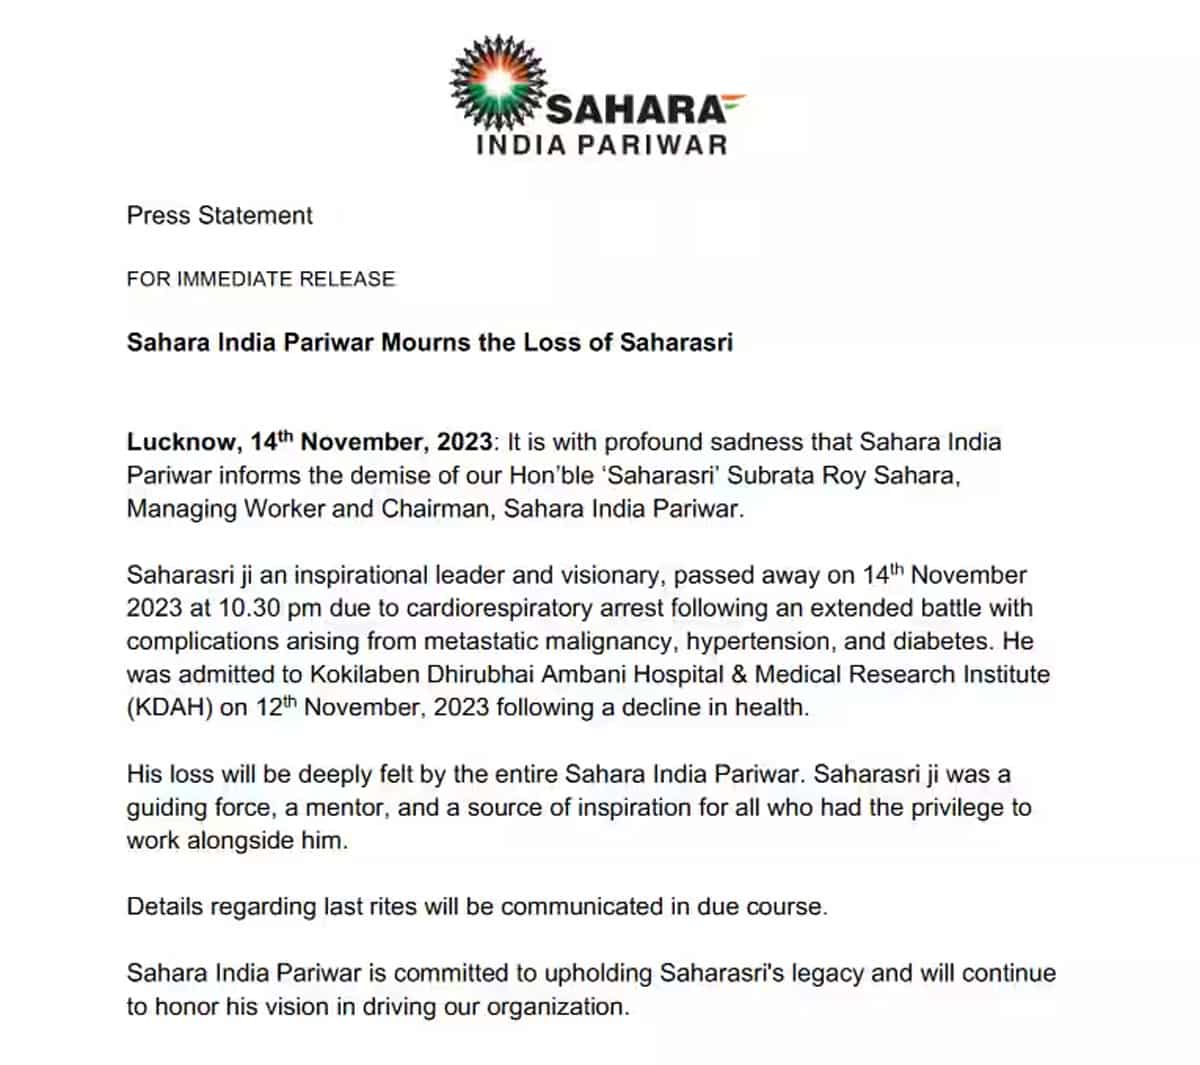 Sahara Group founder Subrata Roy dies at age 75 due to cardiorespiratory arrest in Mumbai